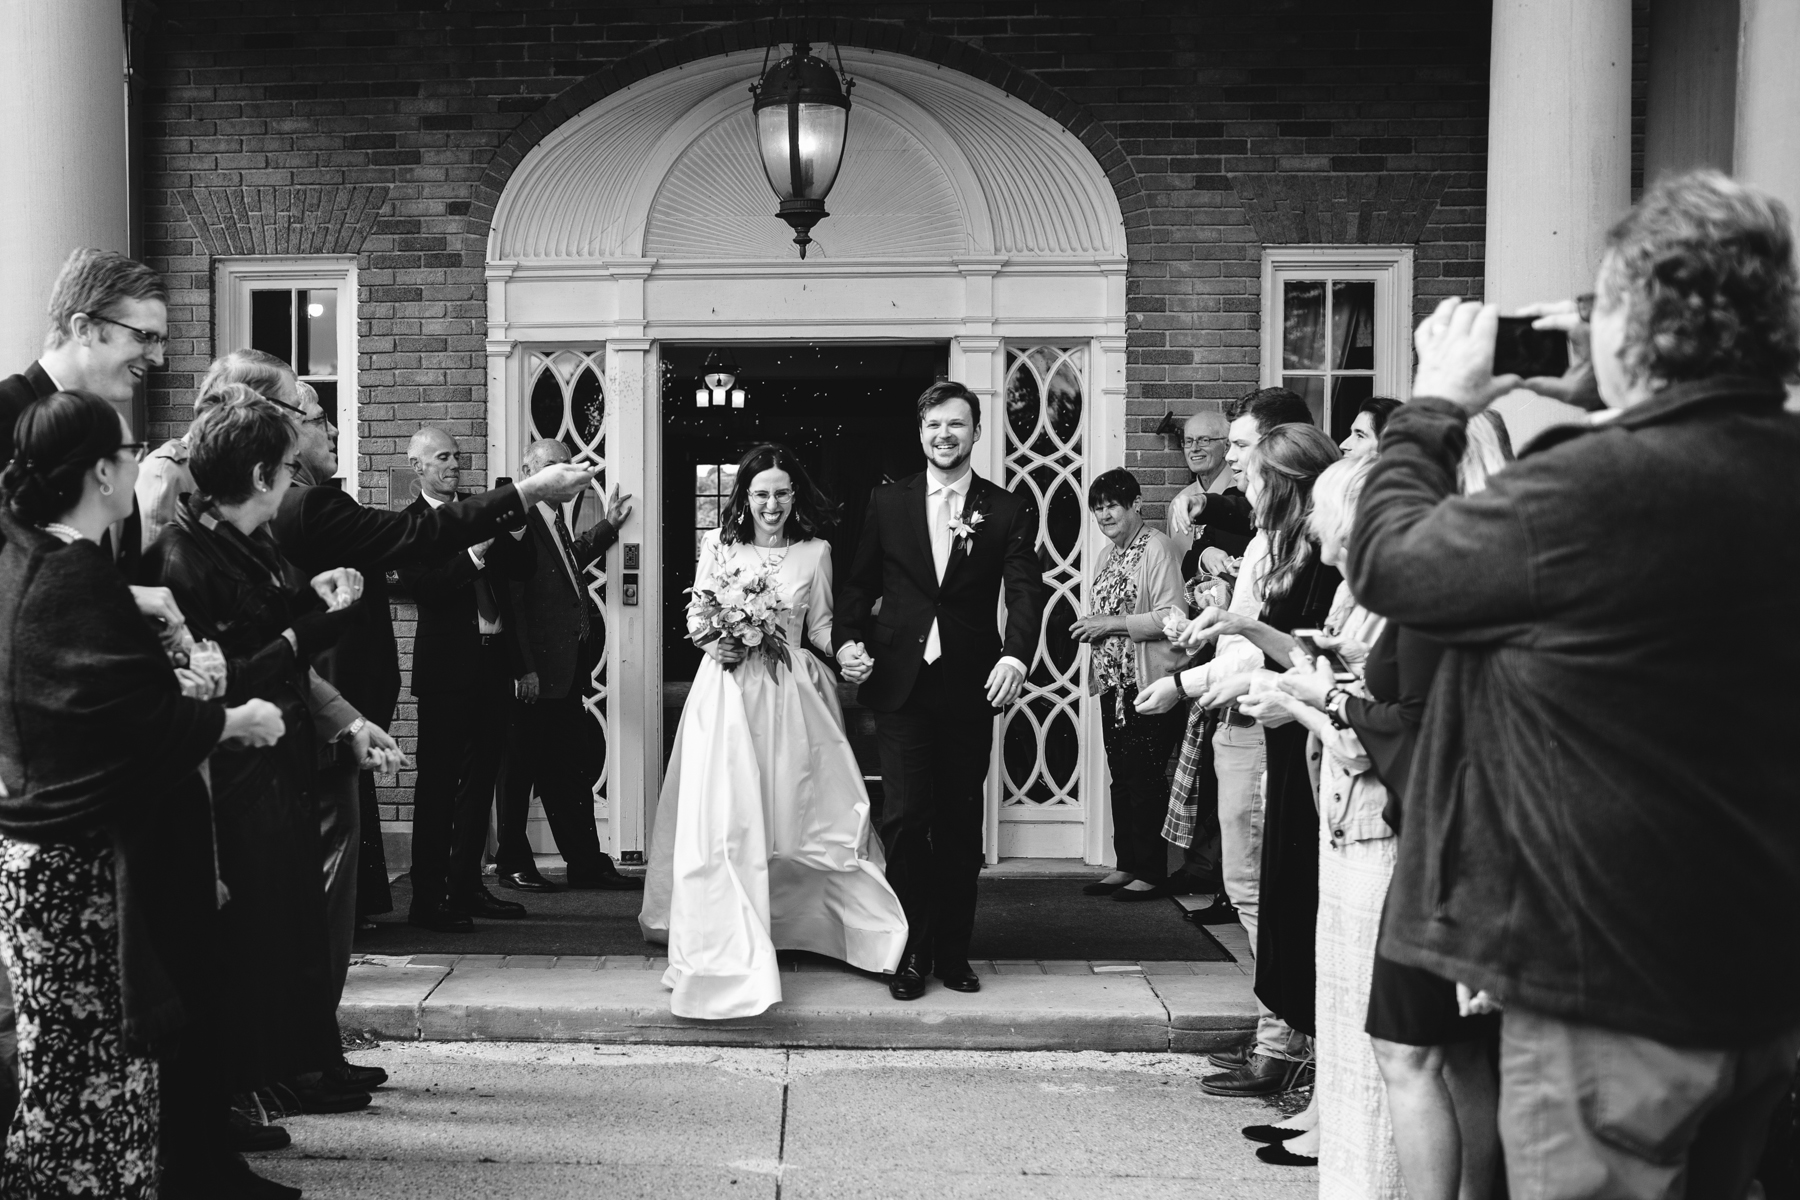 Holland, Michigan wedding at the Felt Mansion